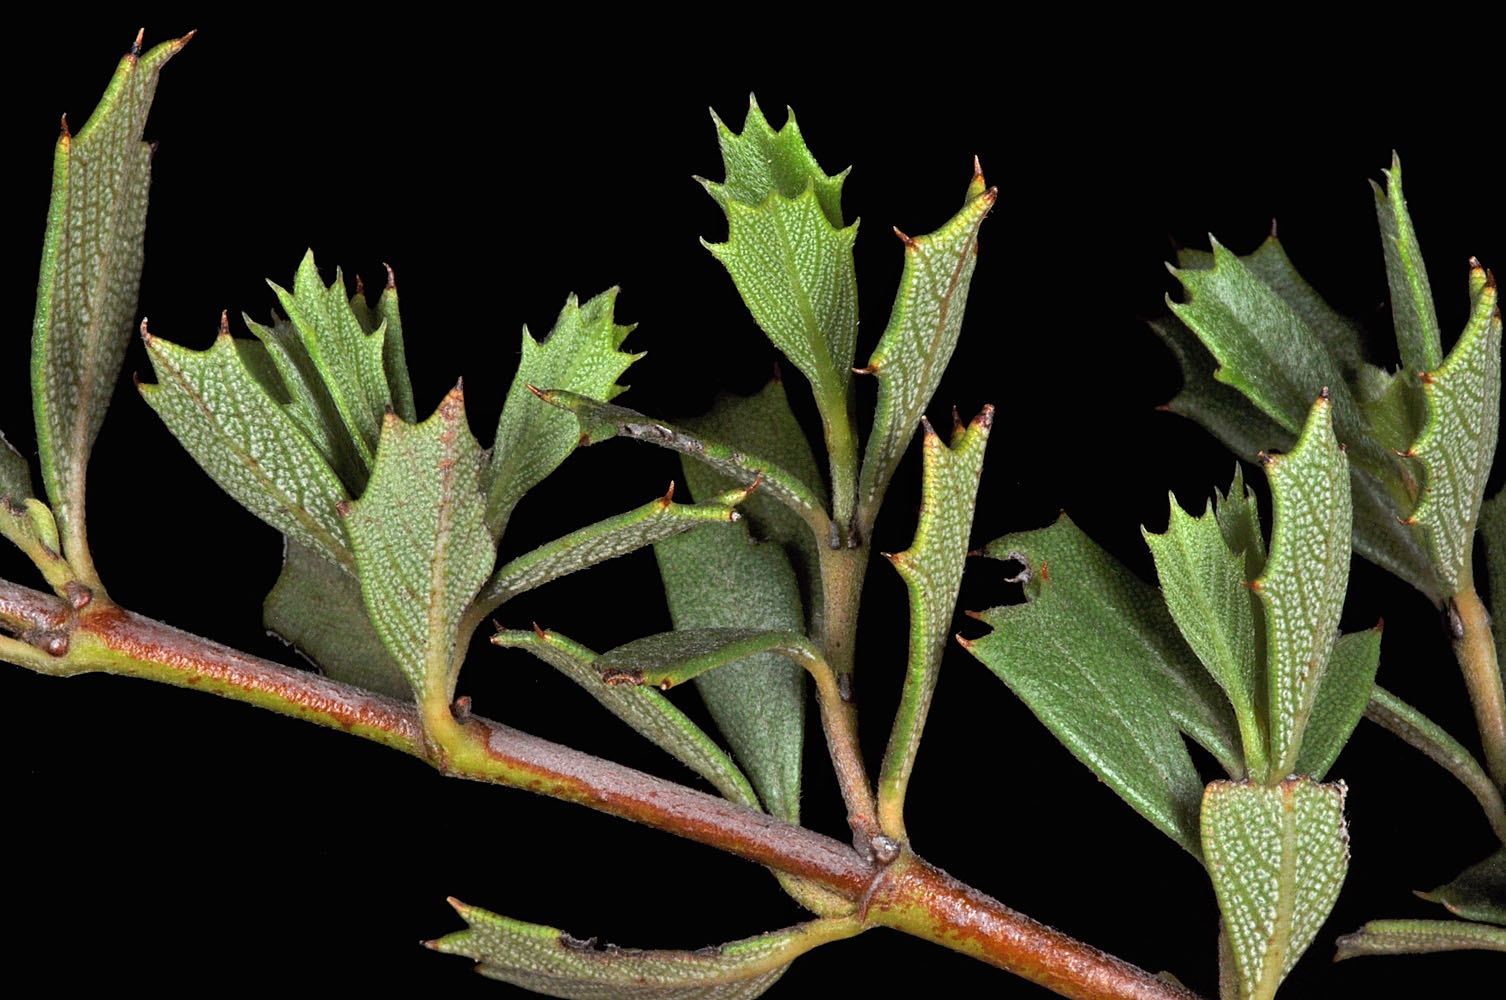 Flora of Eastern Washington Image: Ceanothus prostratus